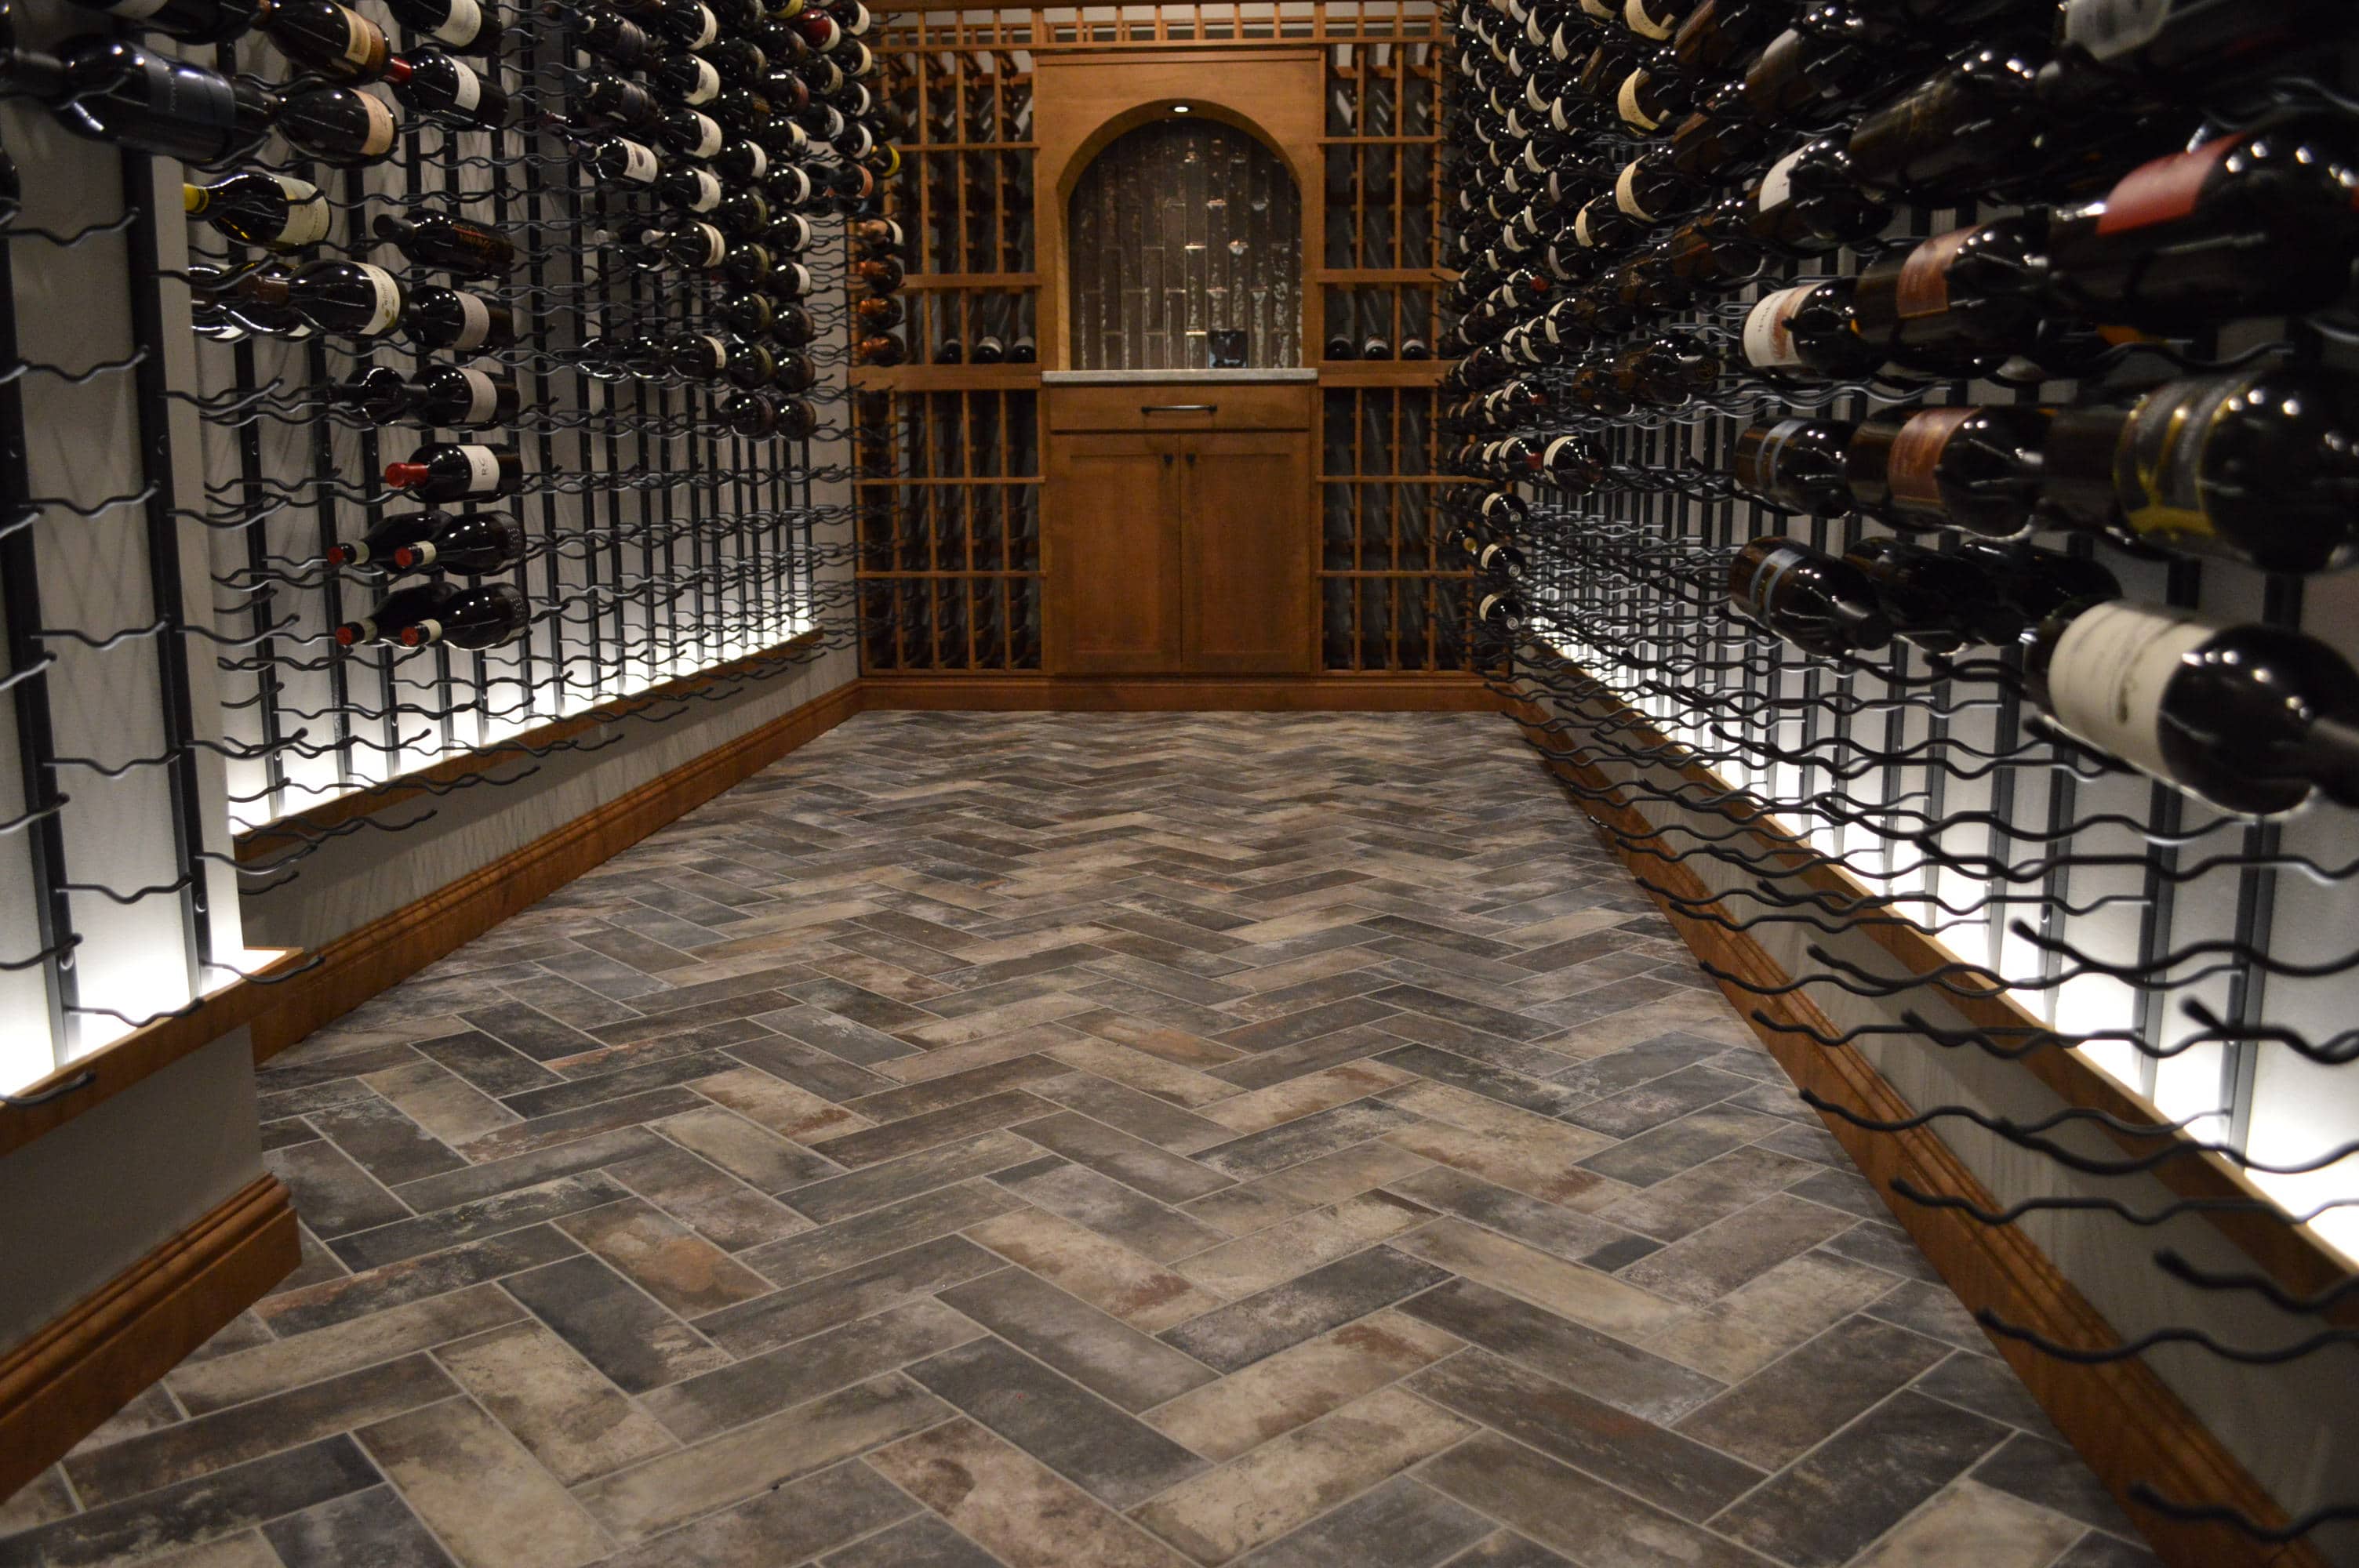 More residential wine cellar design ideas here!